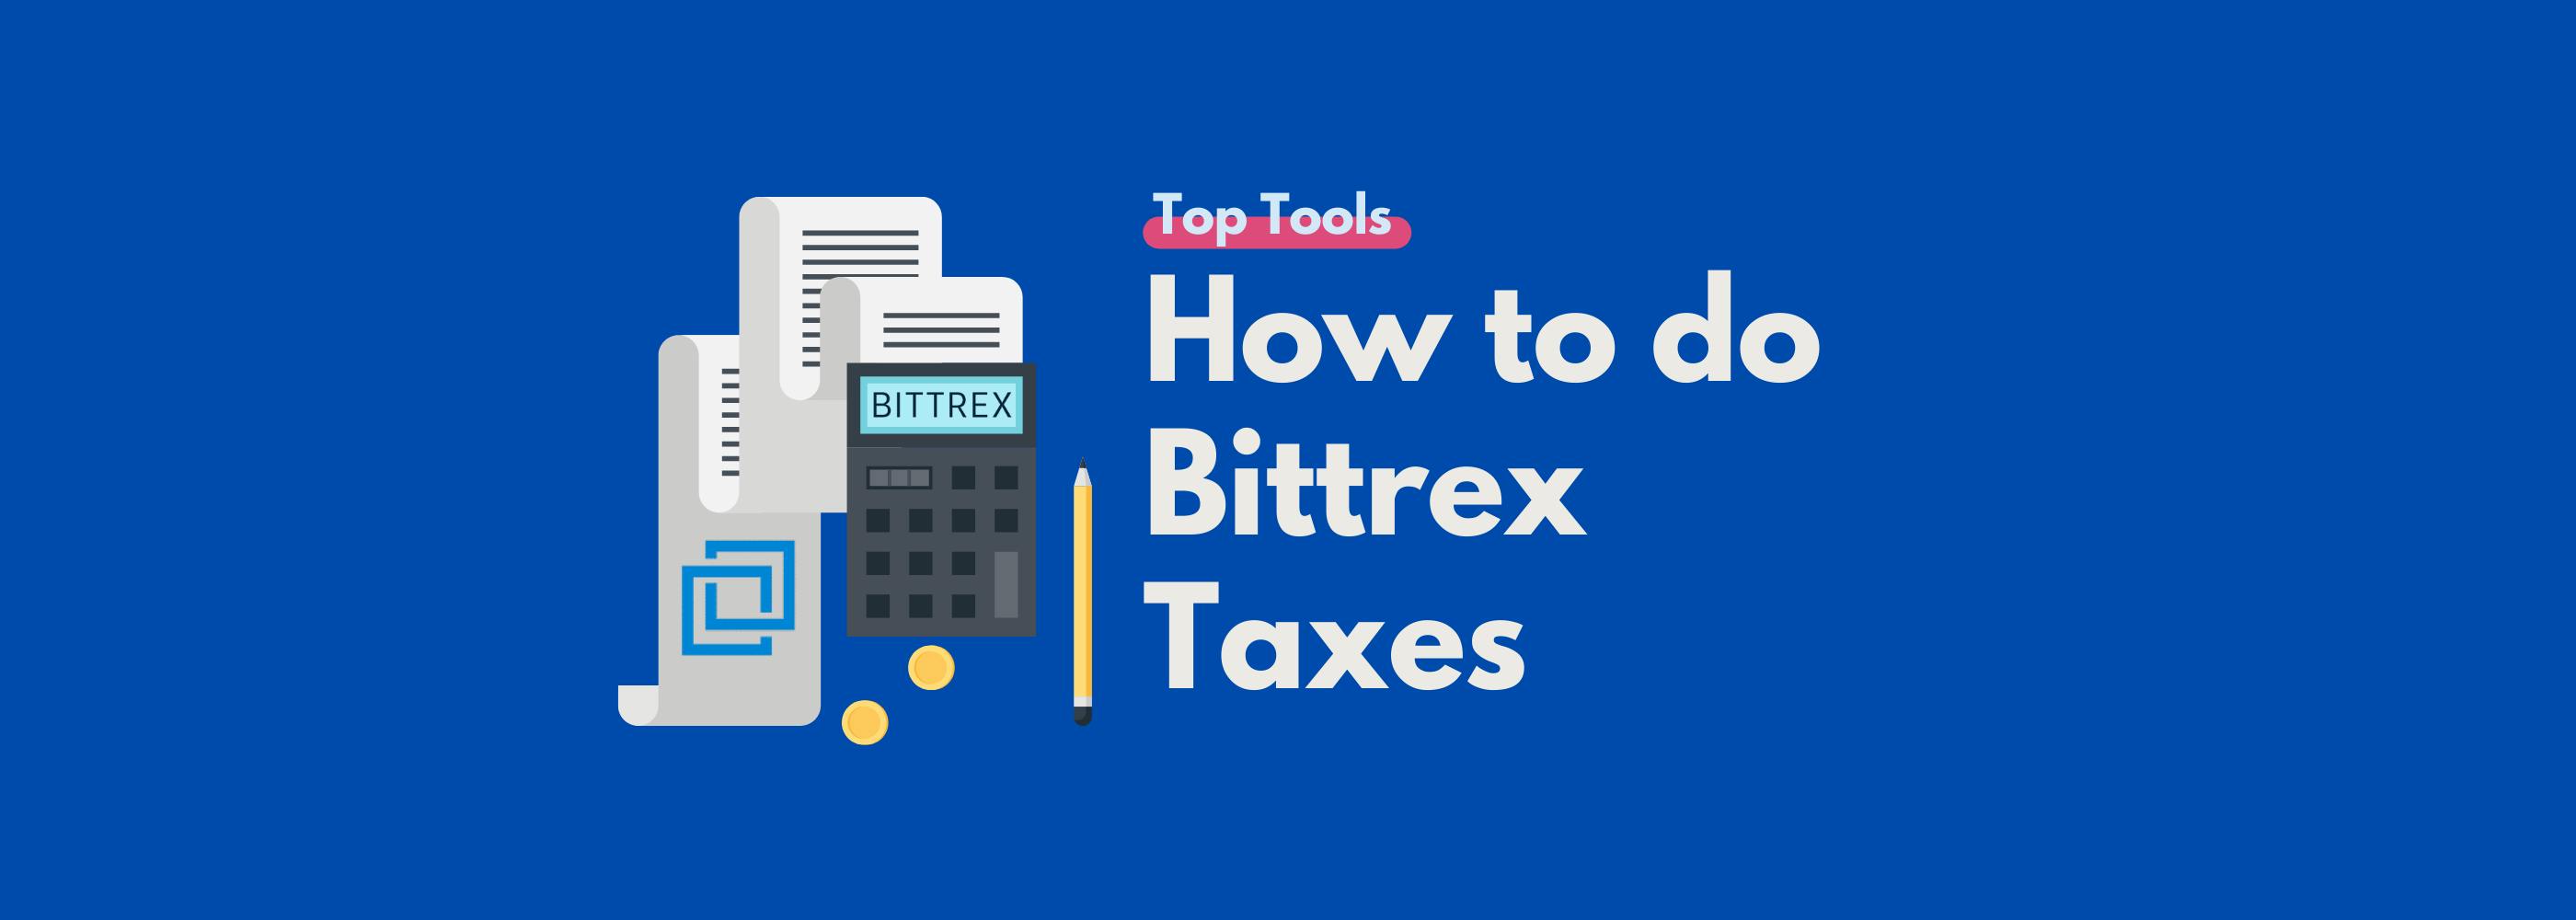 Bittrex Tax Guide